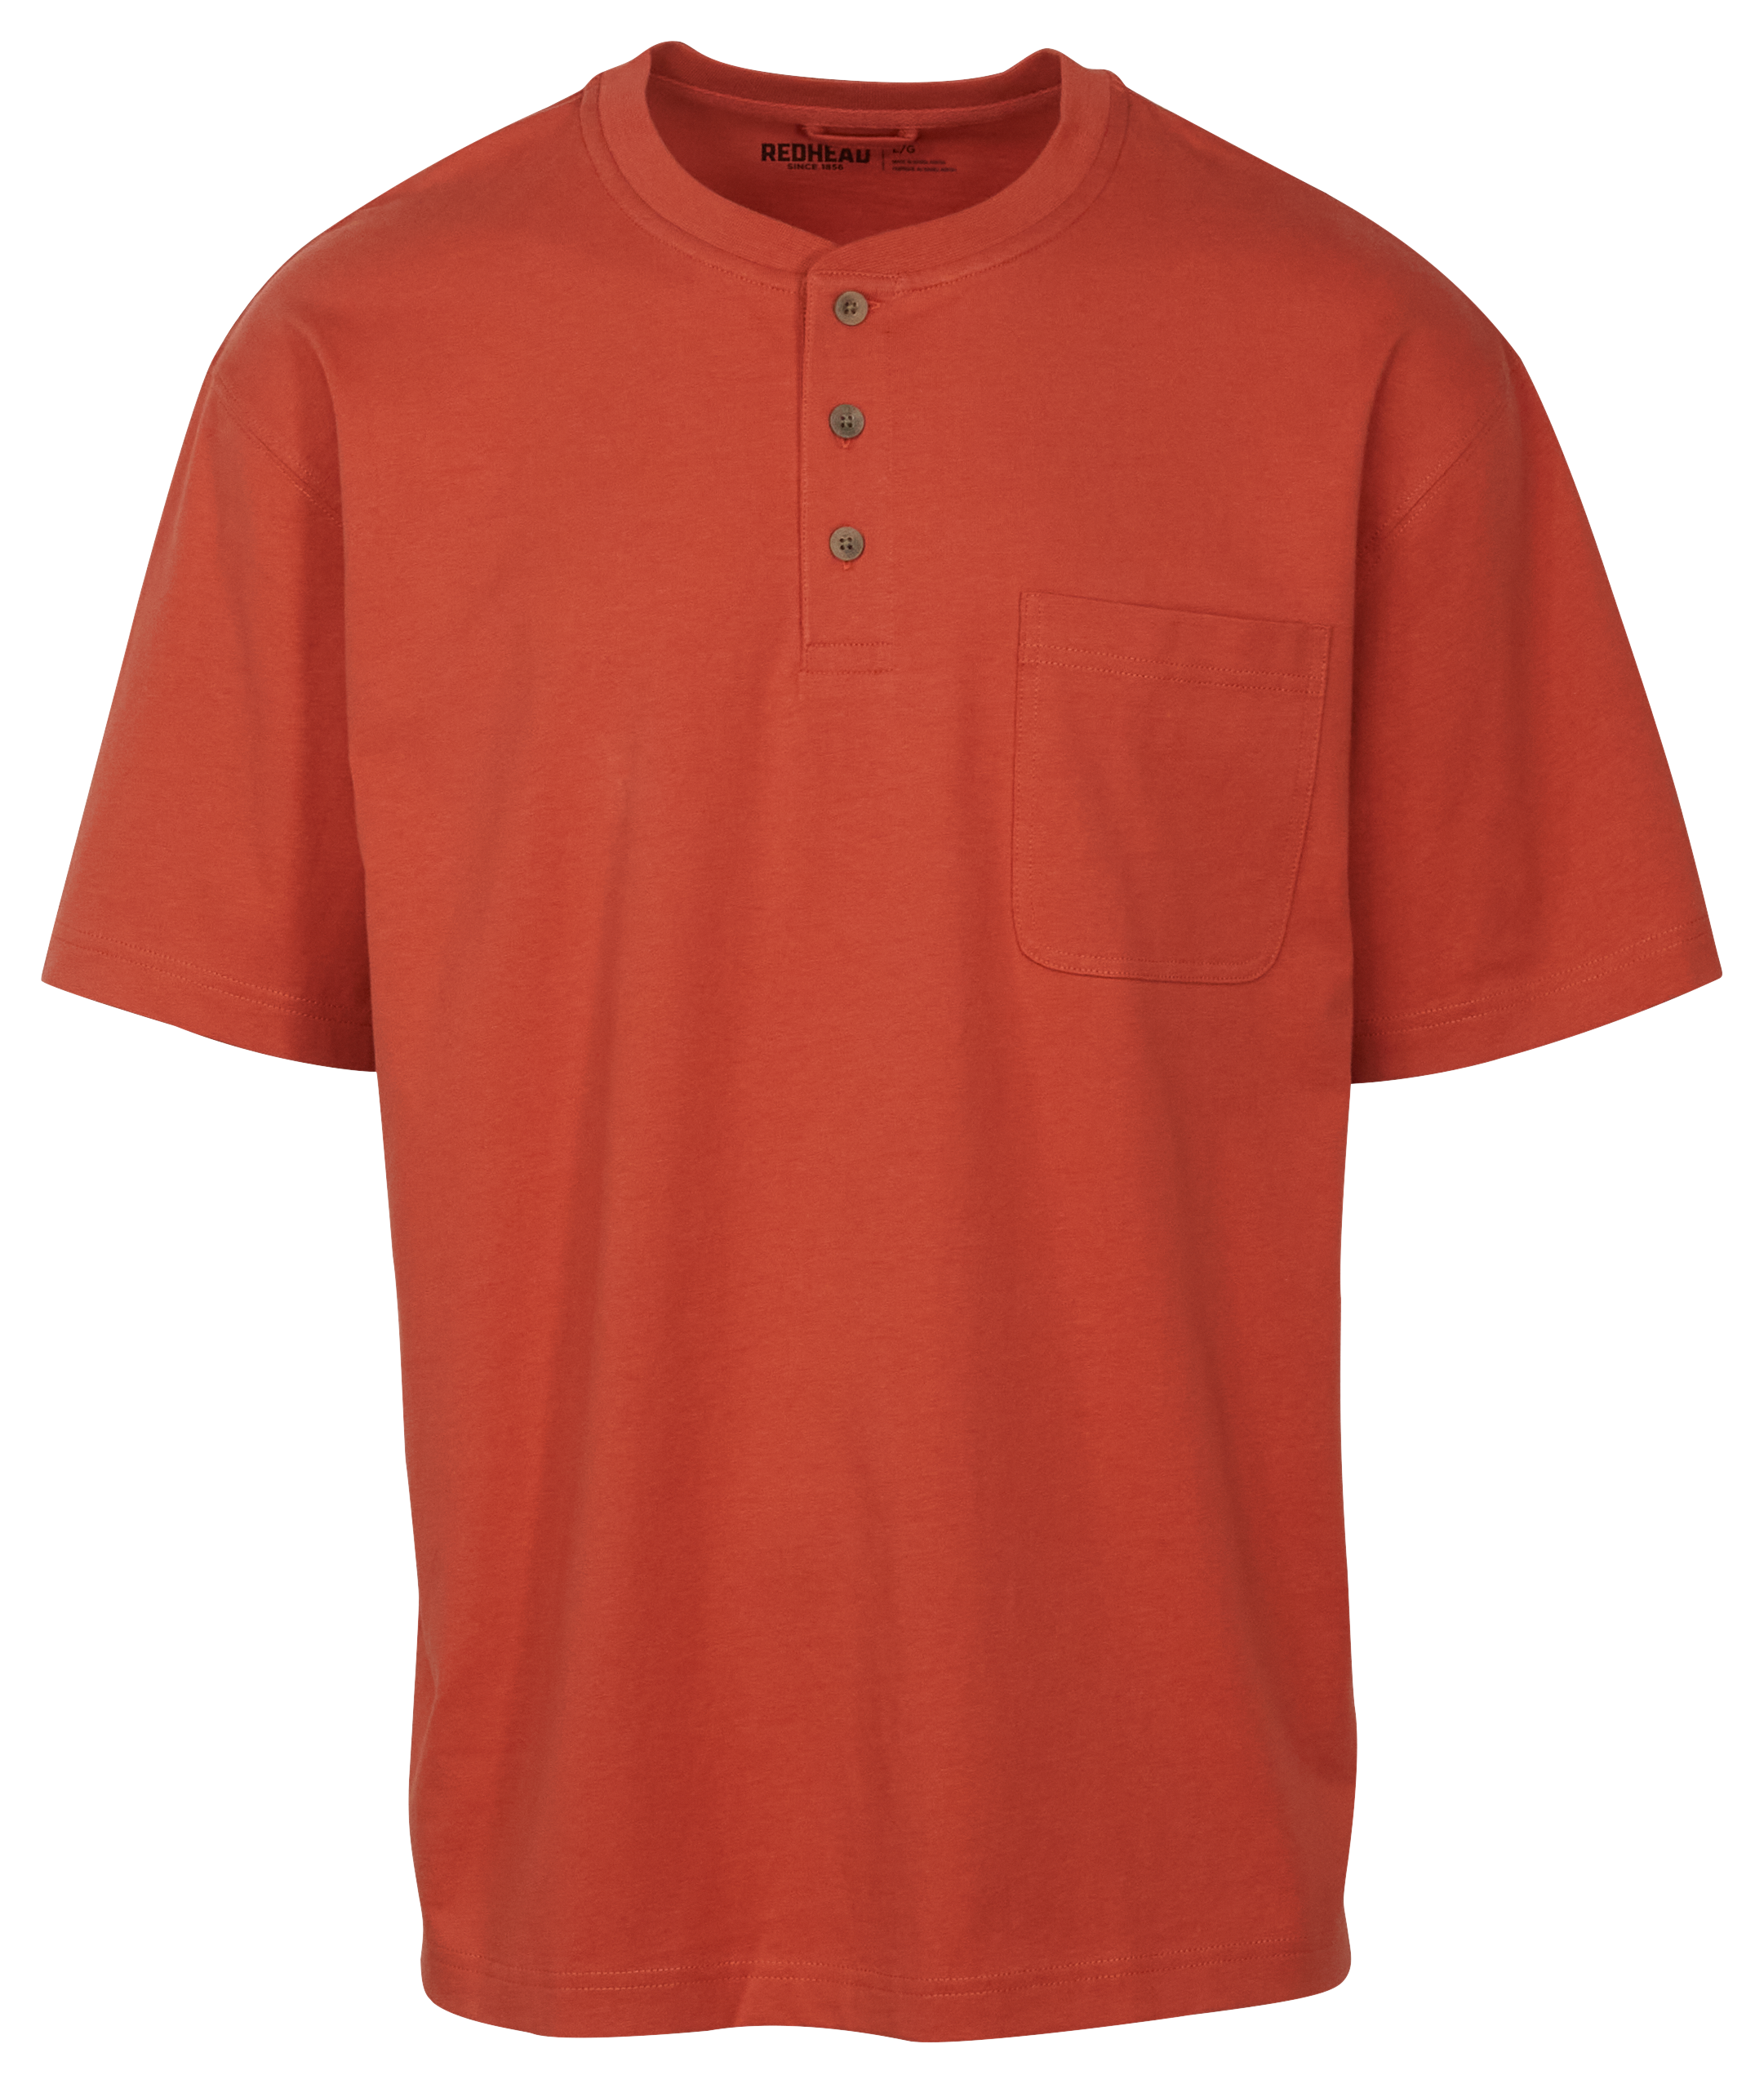 Redhead Crew Neck Long-Sleeve Pocket T-Shirt for Men - Bungee - 4XL